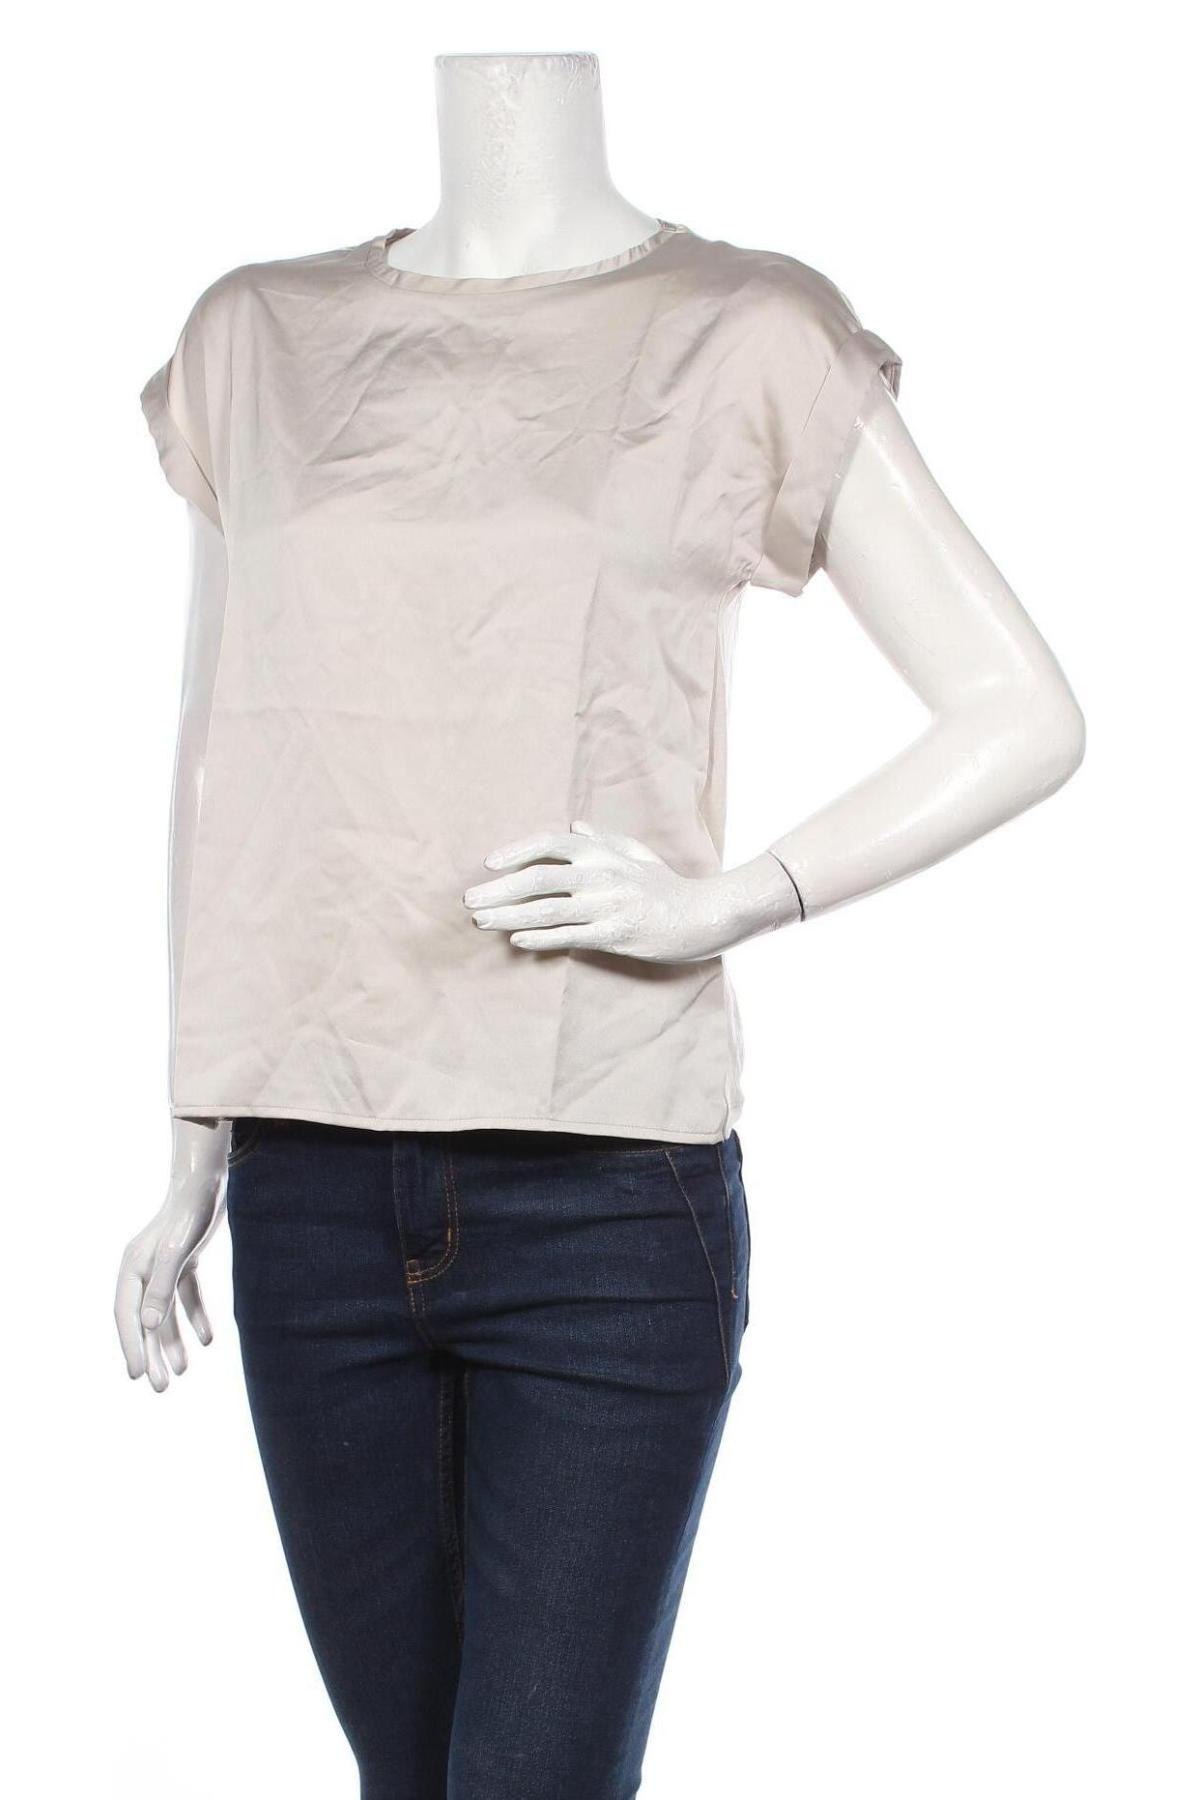 Damen Shirt Vila, Größe XS, Farbe Grau, Polyester, Viskose, Elastan, Preis 21,47 €